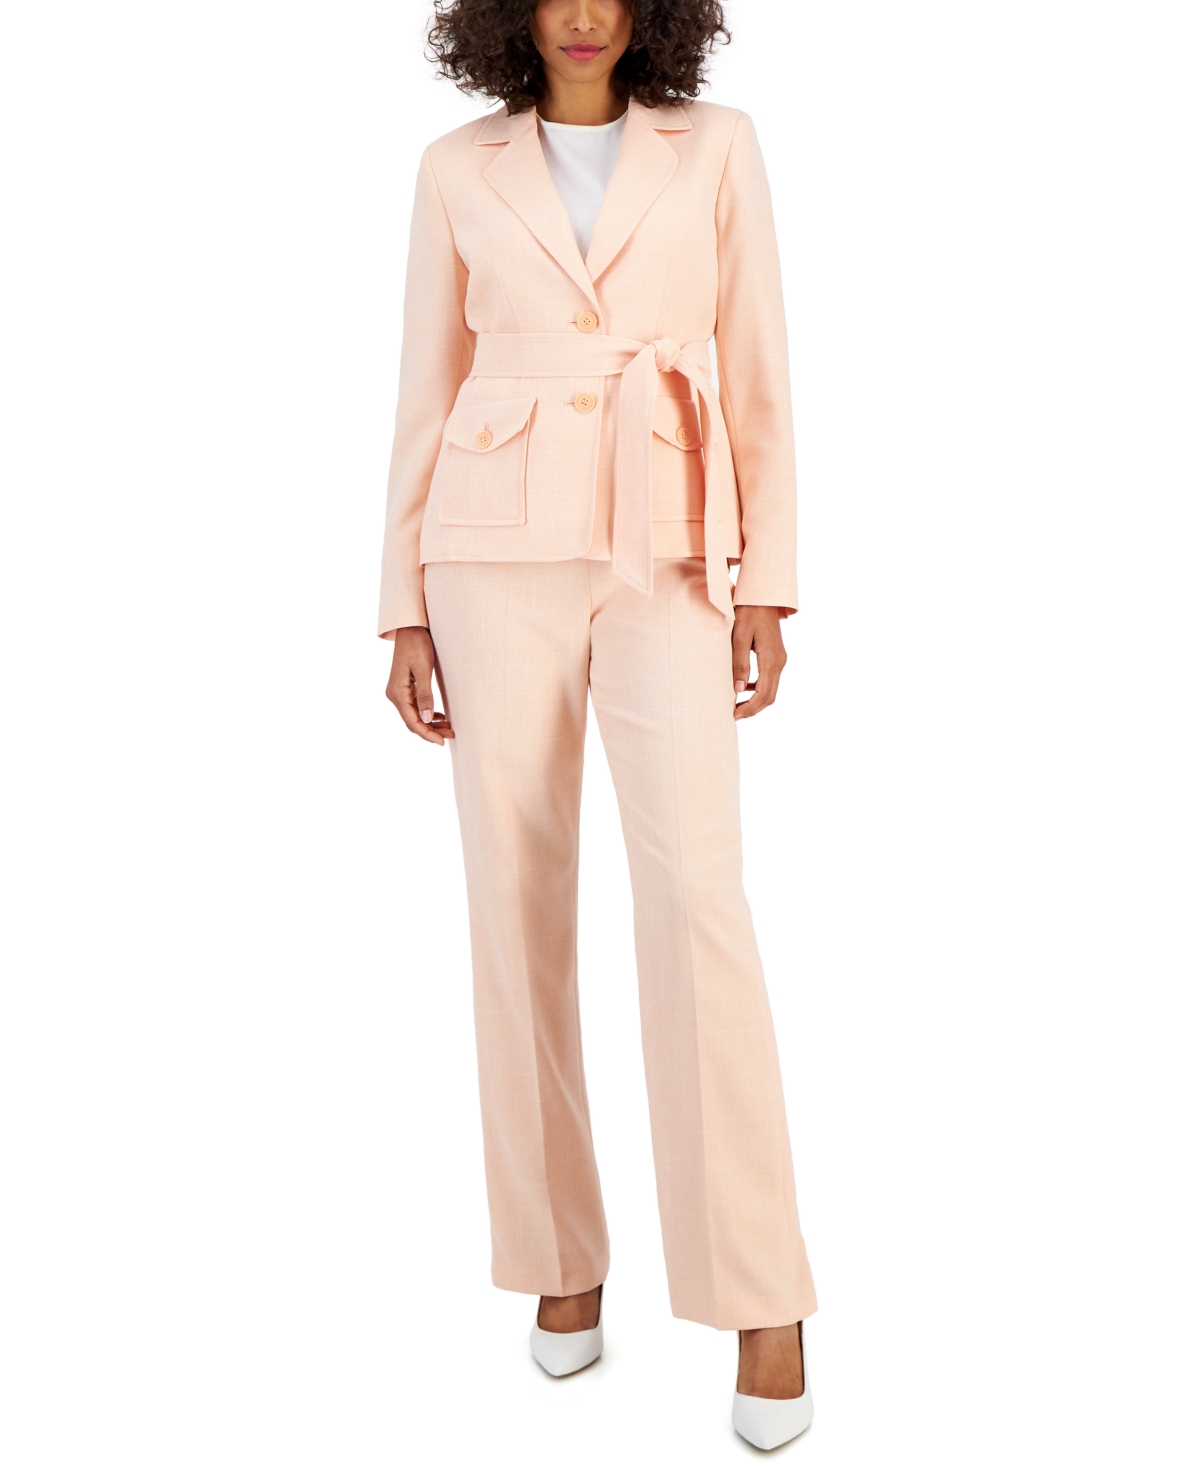 Women's Belted Safari Jacket Pantsuit, Regular & Petite Sizes - Apricot/White